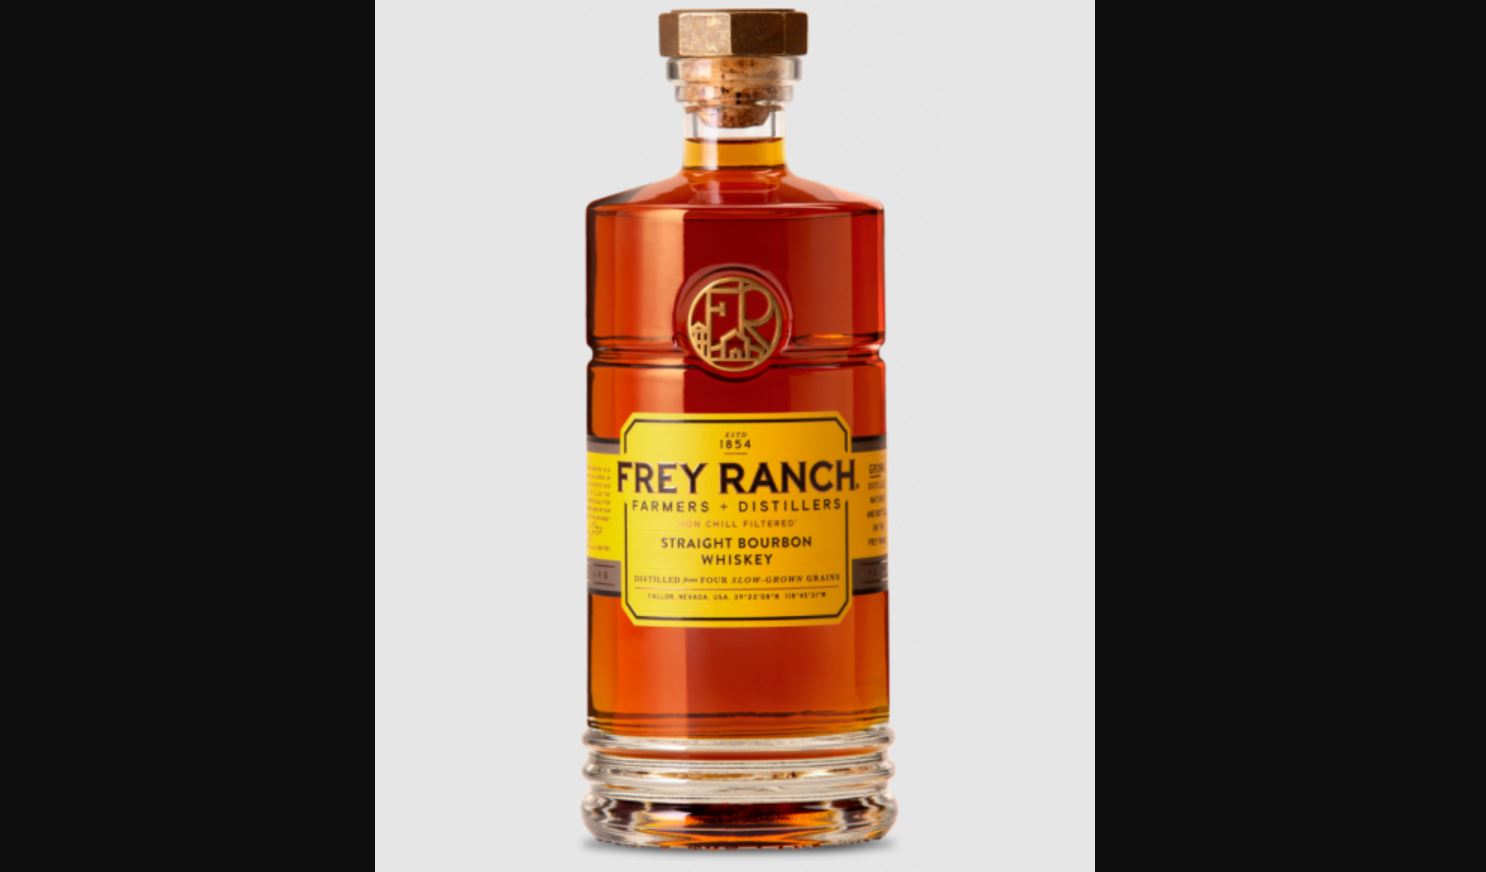 Frey Ranch Straight Bourbon Whiskey